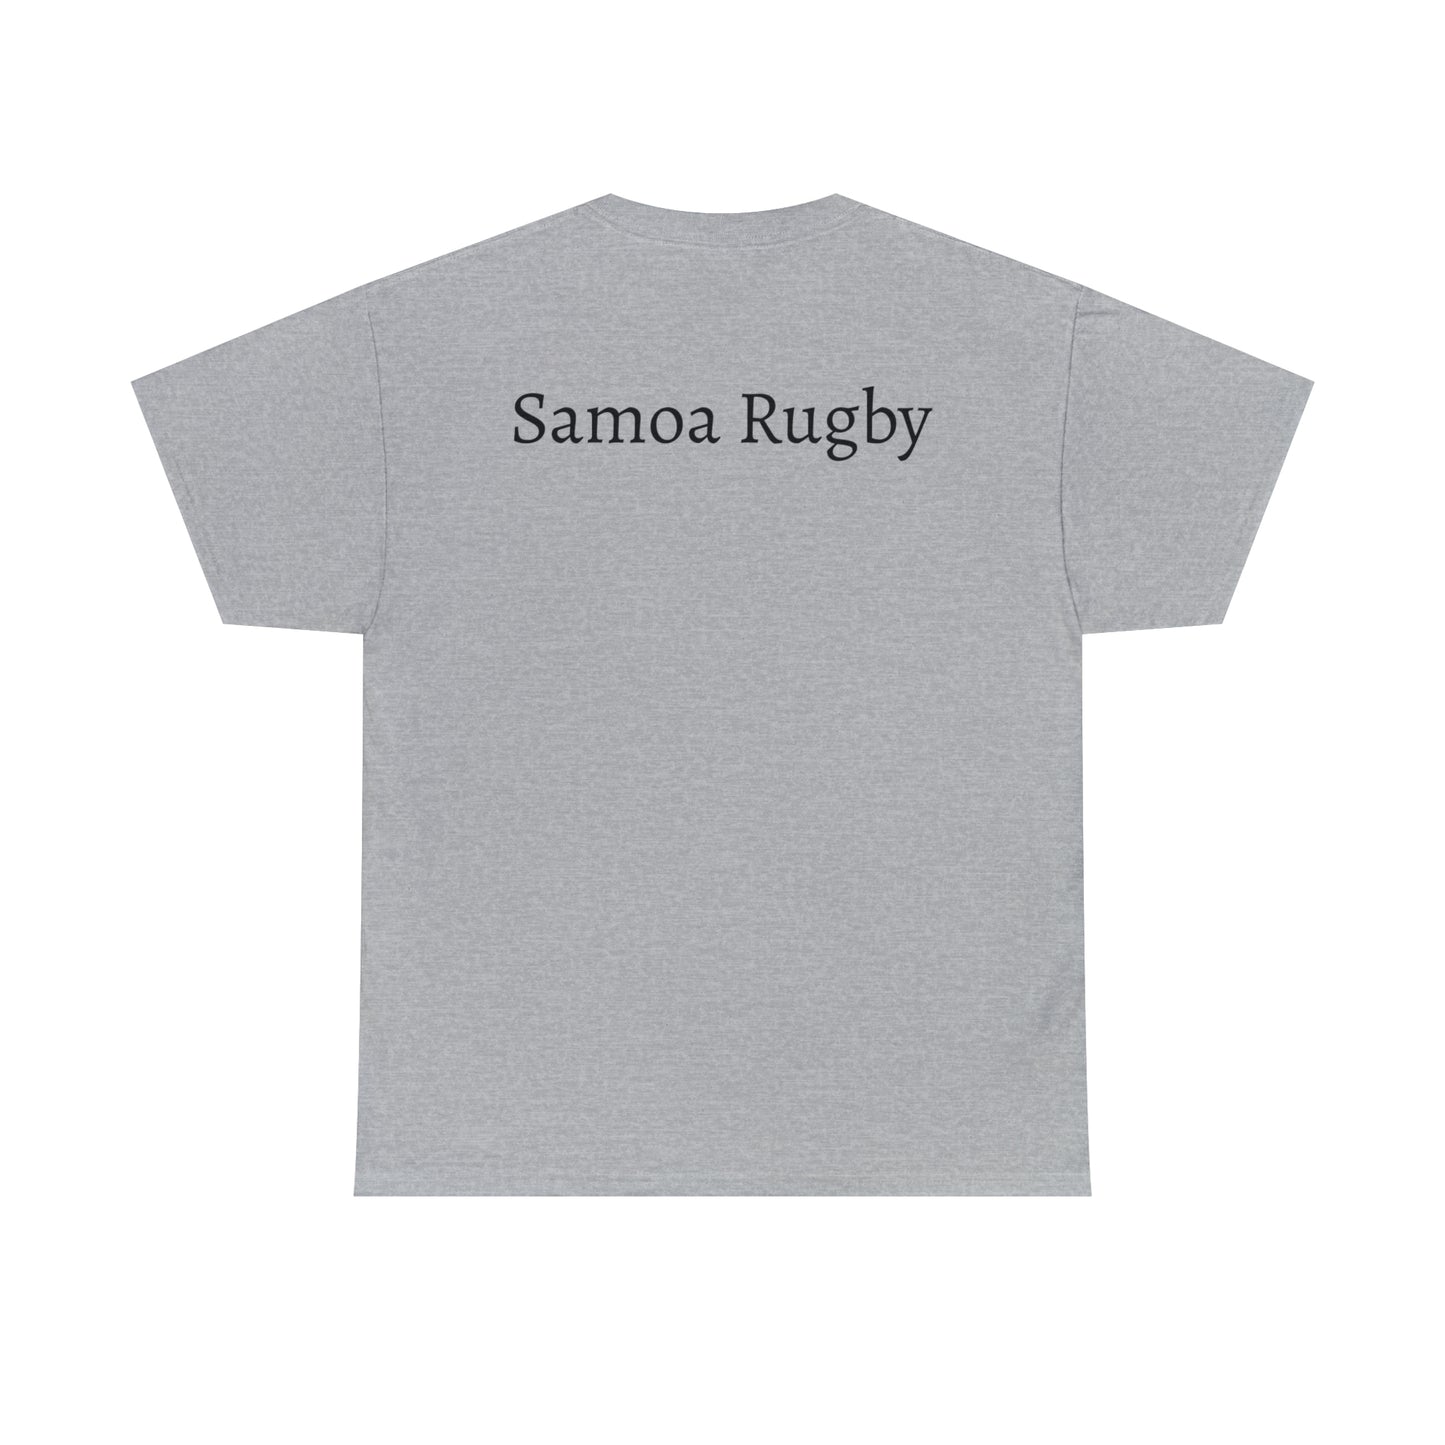 Ready Samoa - light shirt